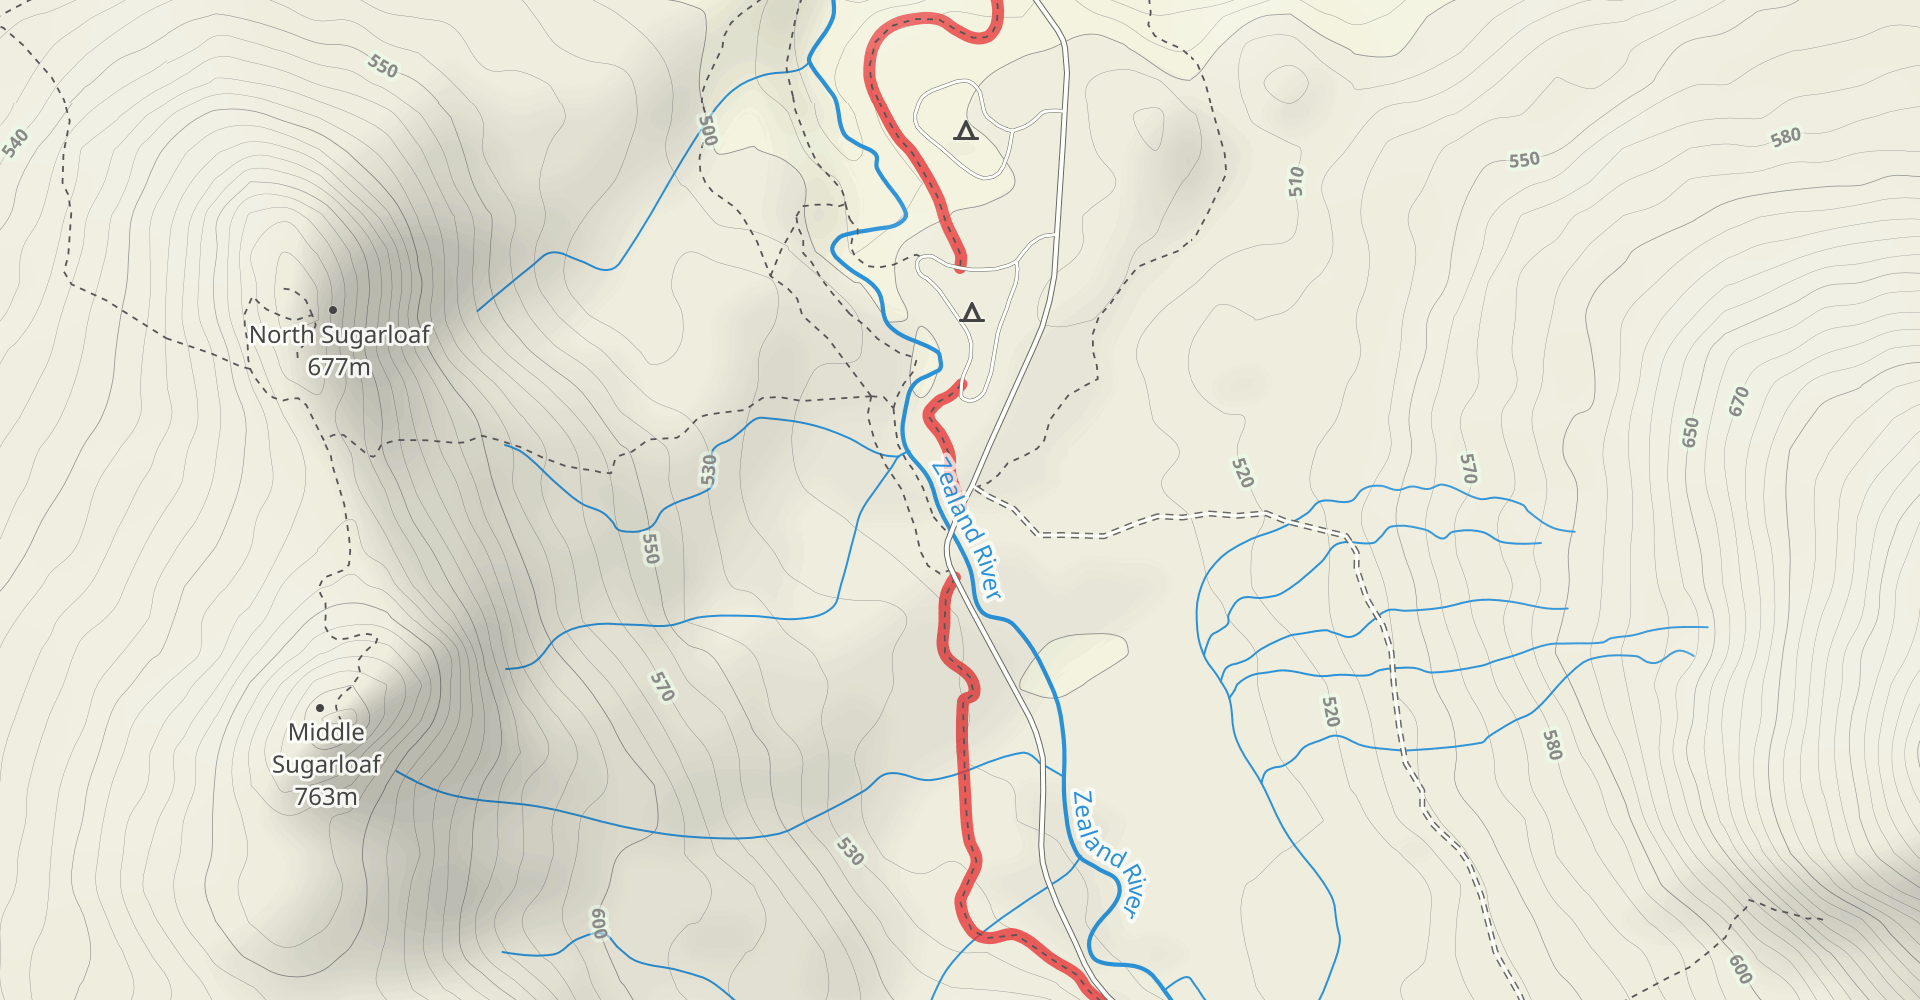 North and Middle Sugarloaf via Sugarloaf Trail